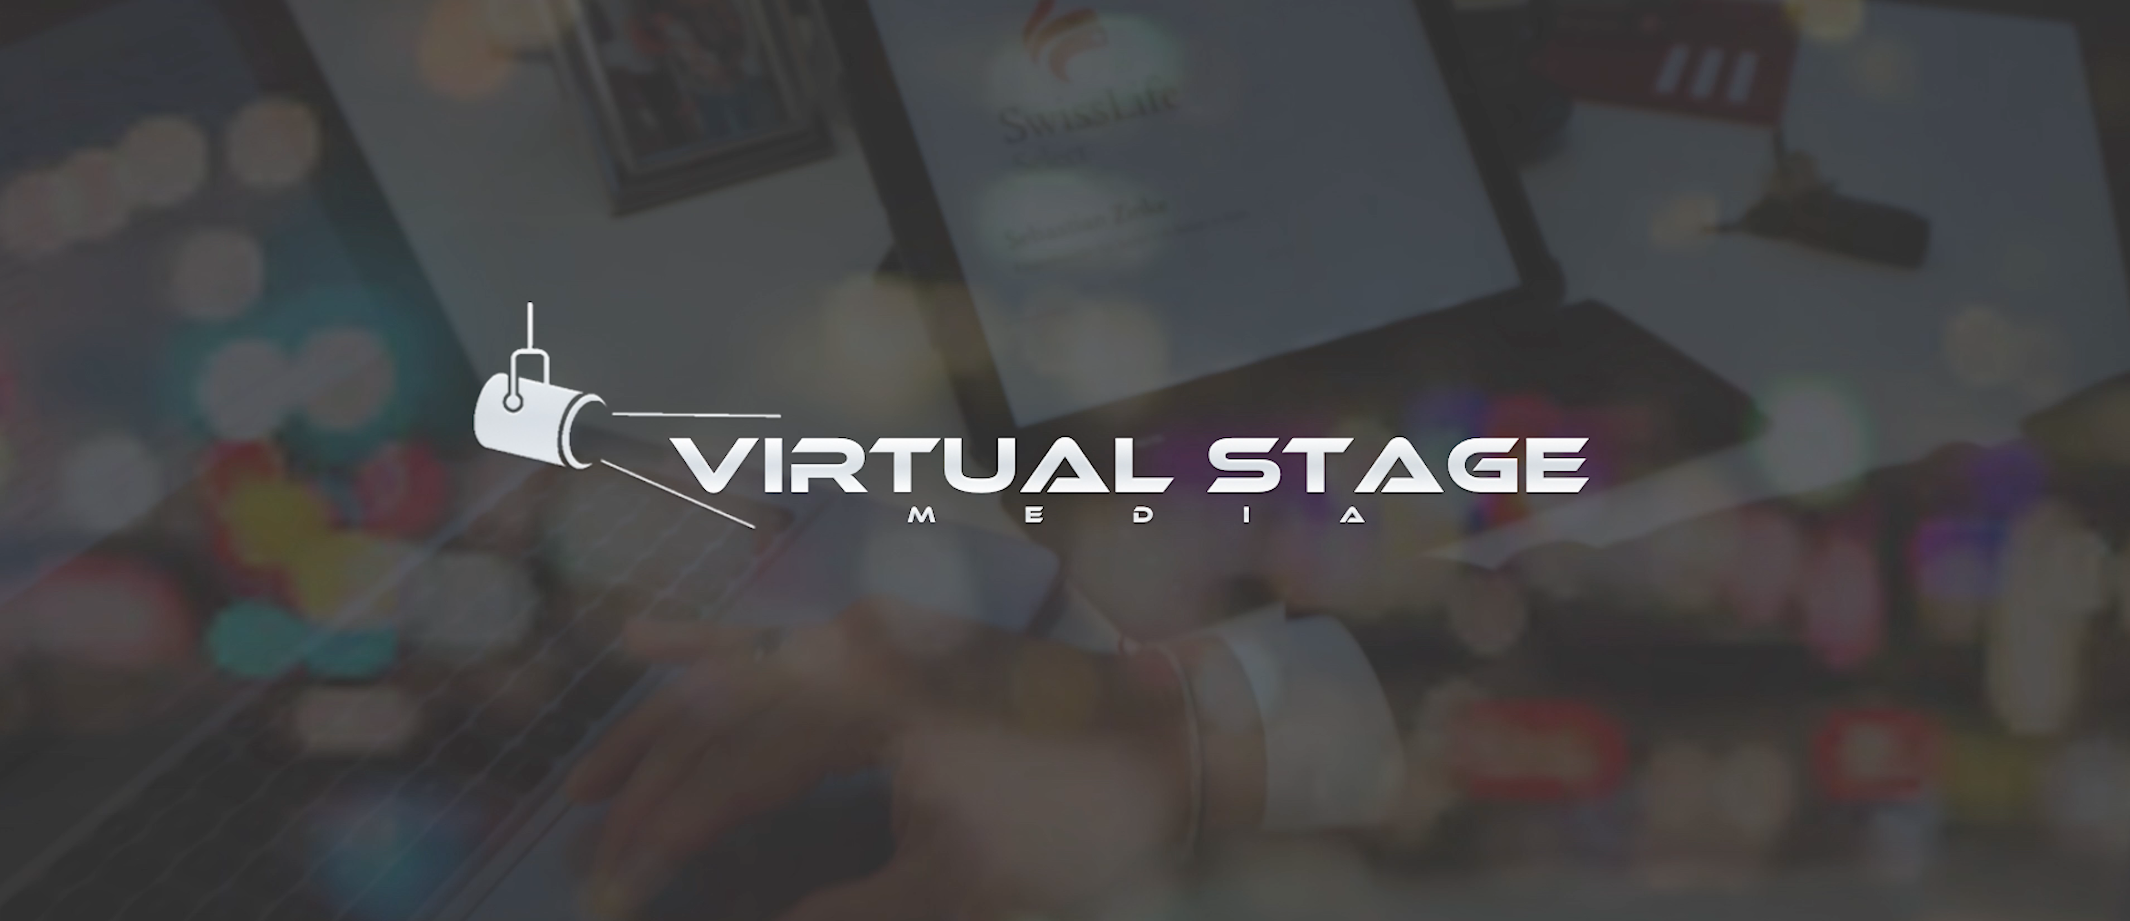 Virtual Stage Media